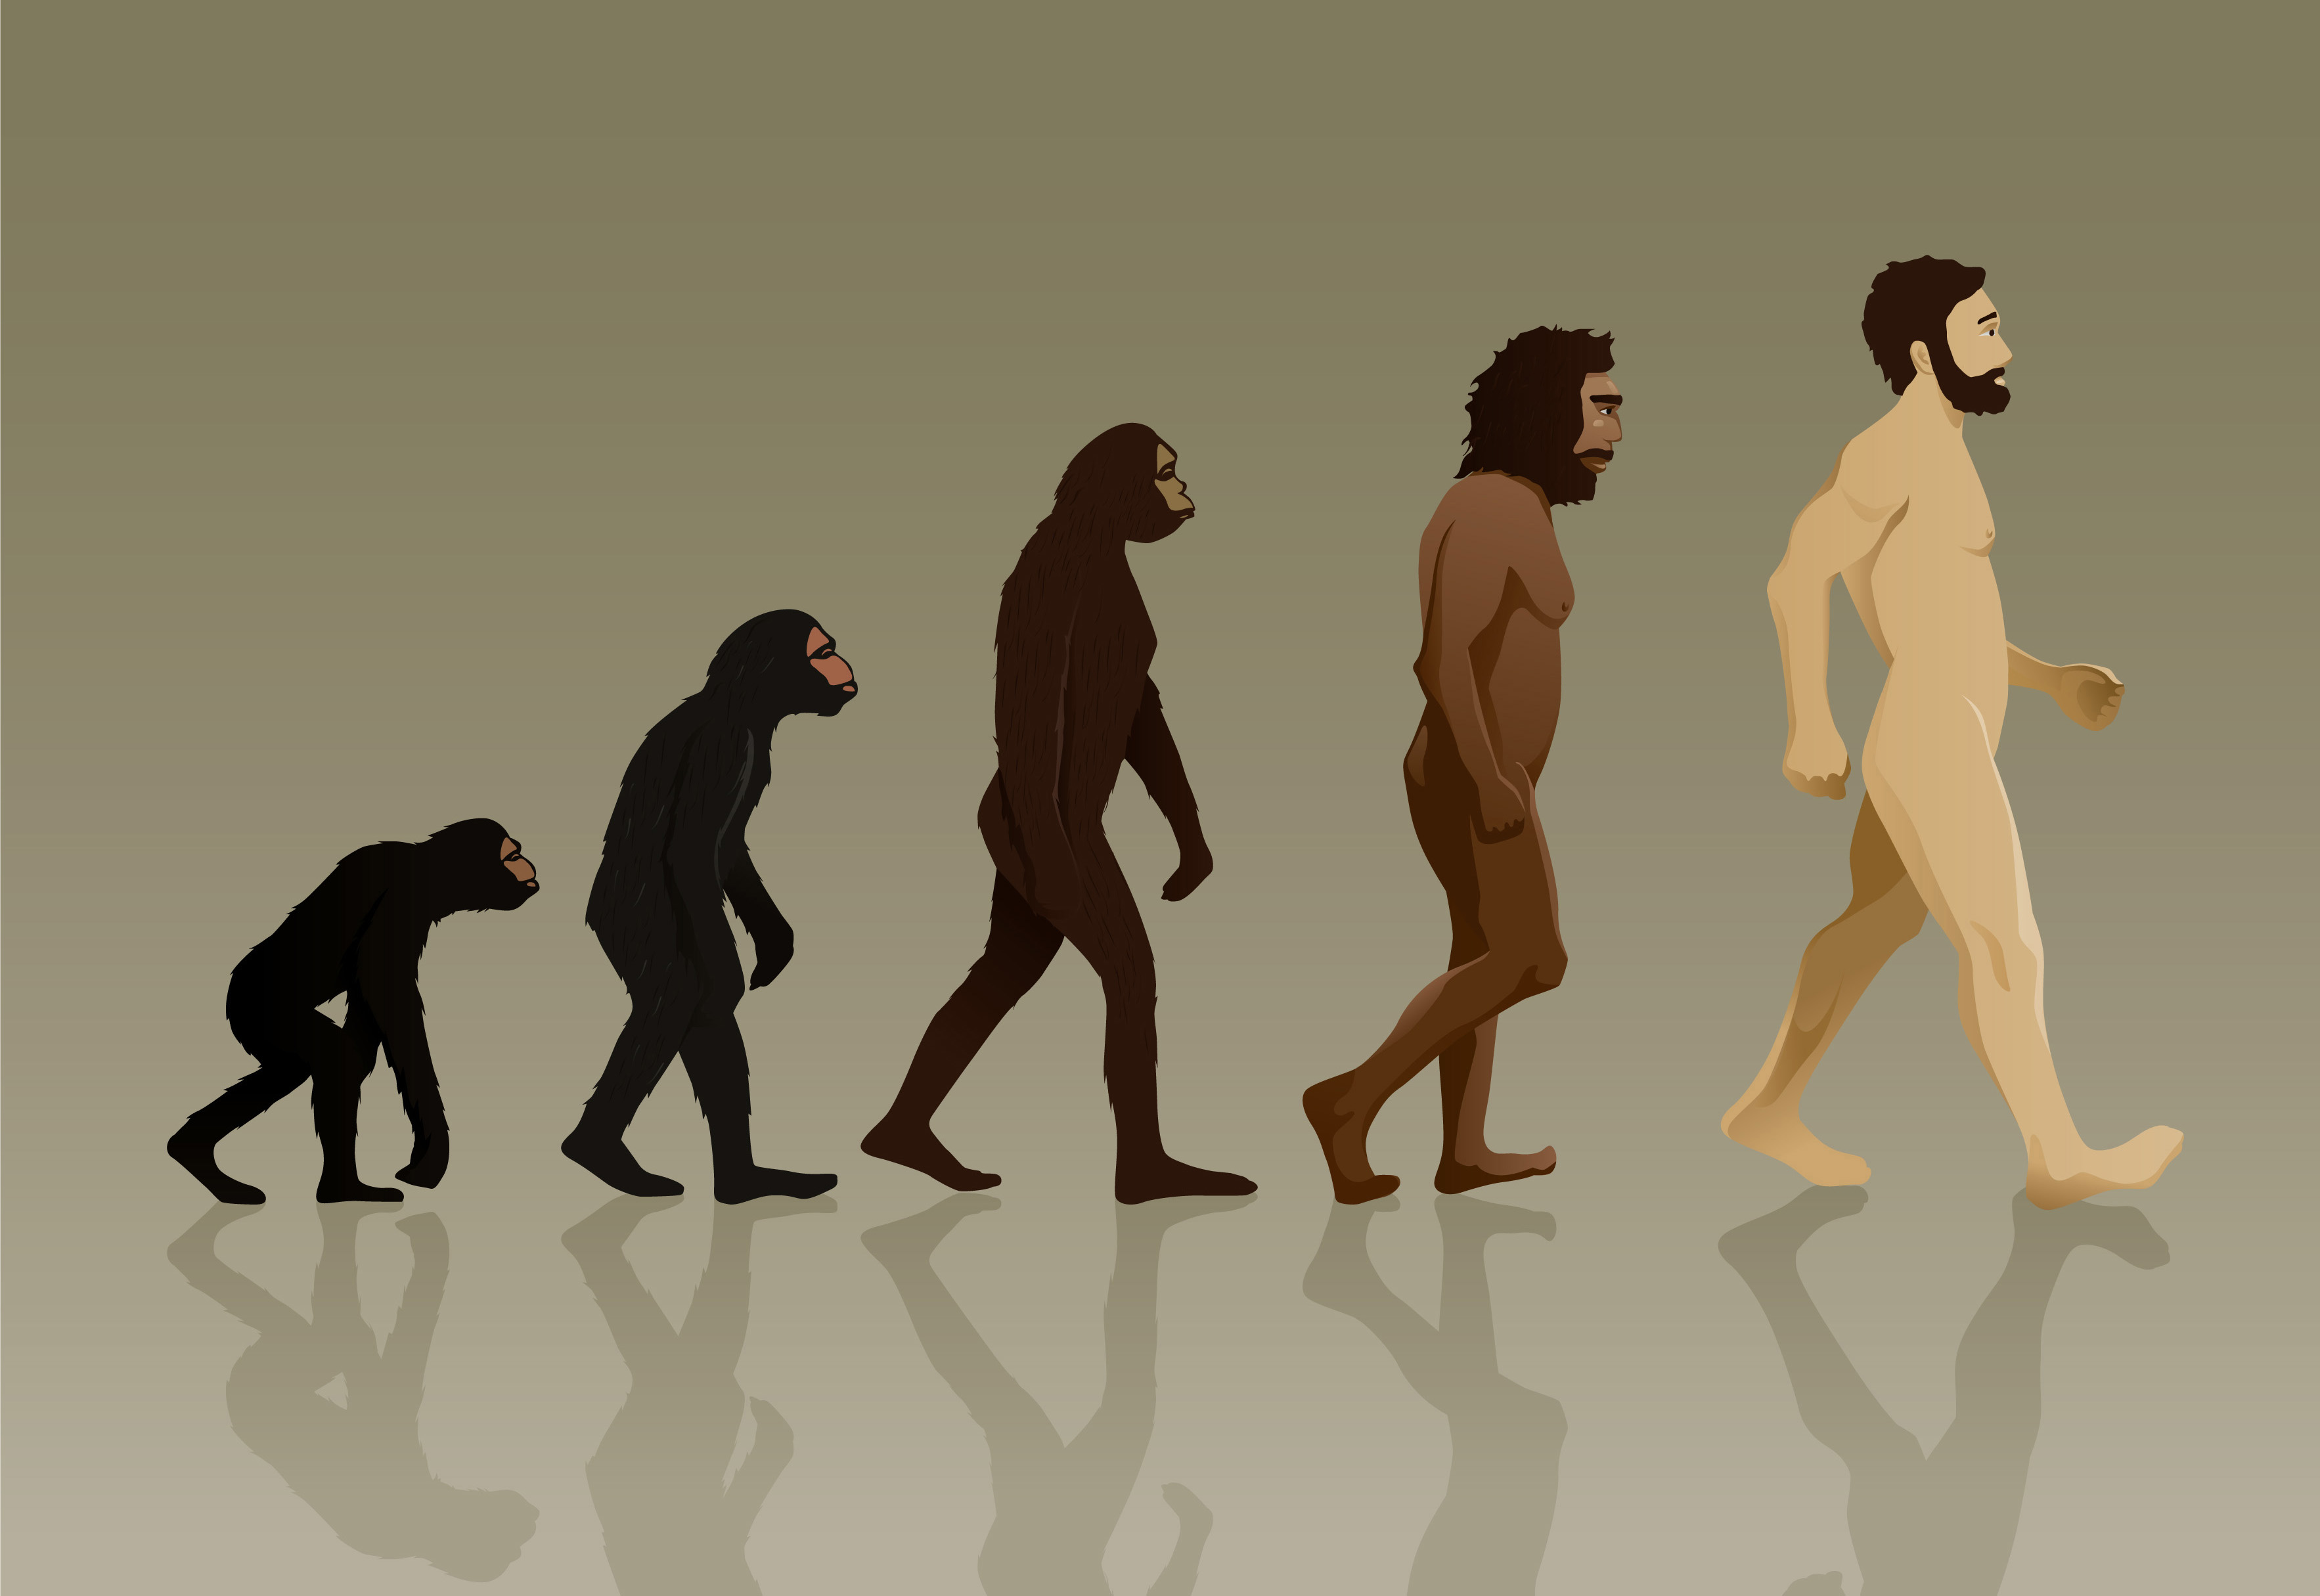 Как получить human. Эволюция Дарвин хомо. Ступени эволюции человека по Дарвину. Хомо сапиенс обезьяна. Эволюция обезьяны в человека.